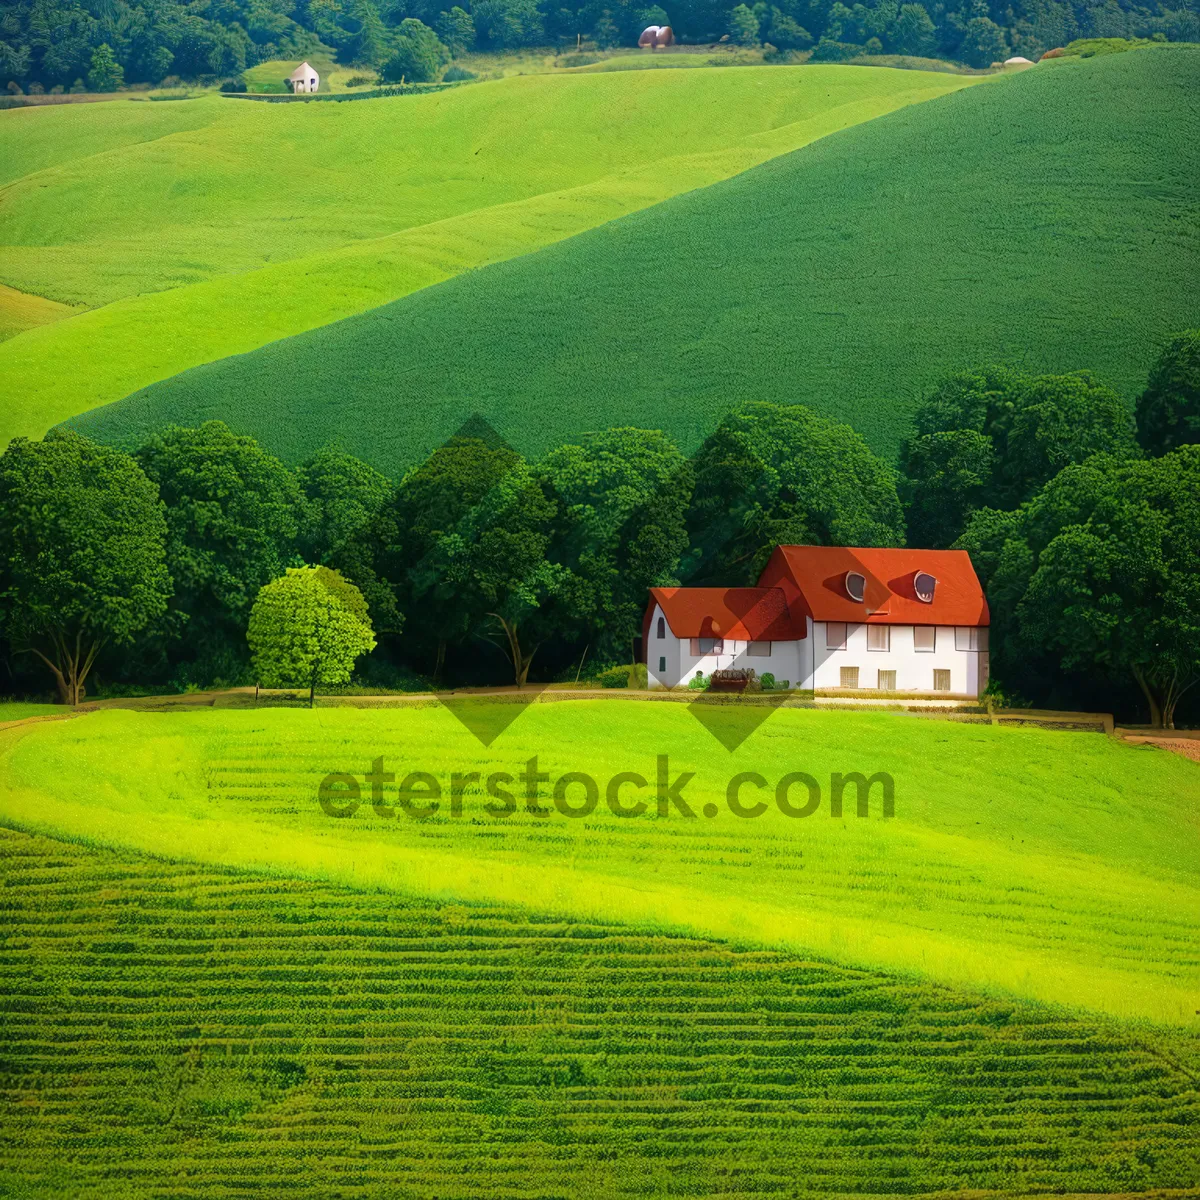 Picture of Serenity of Rural Landscape under Summer Sky